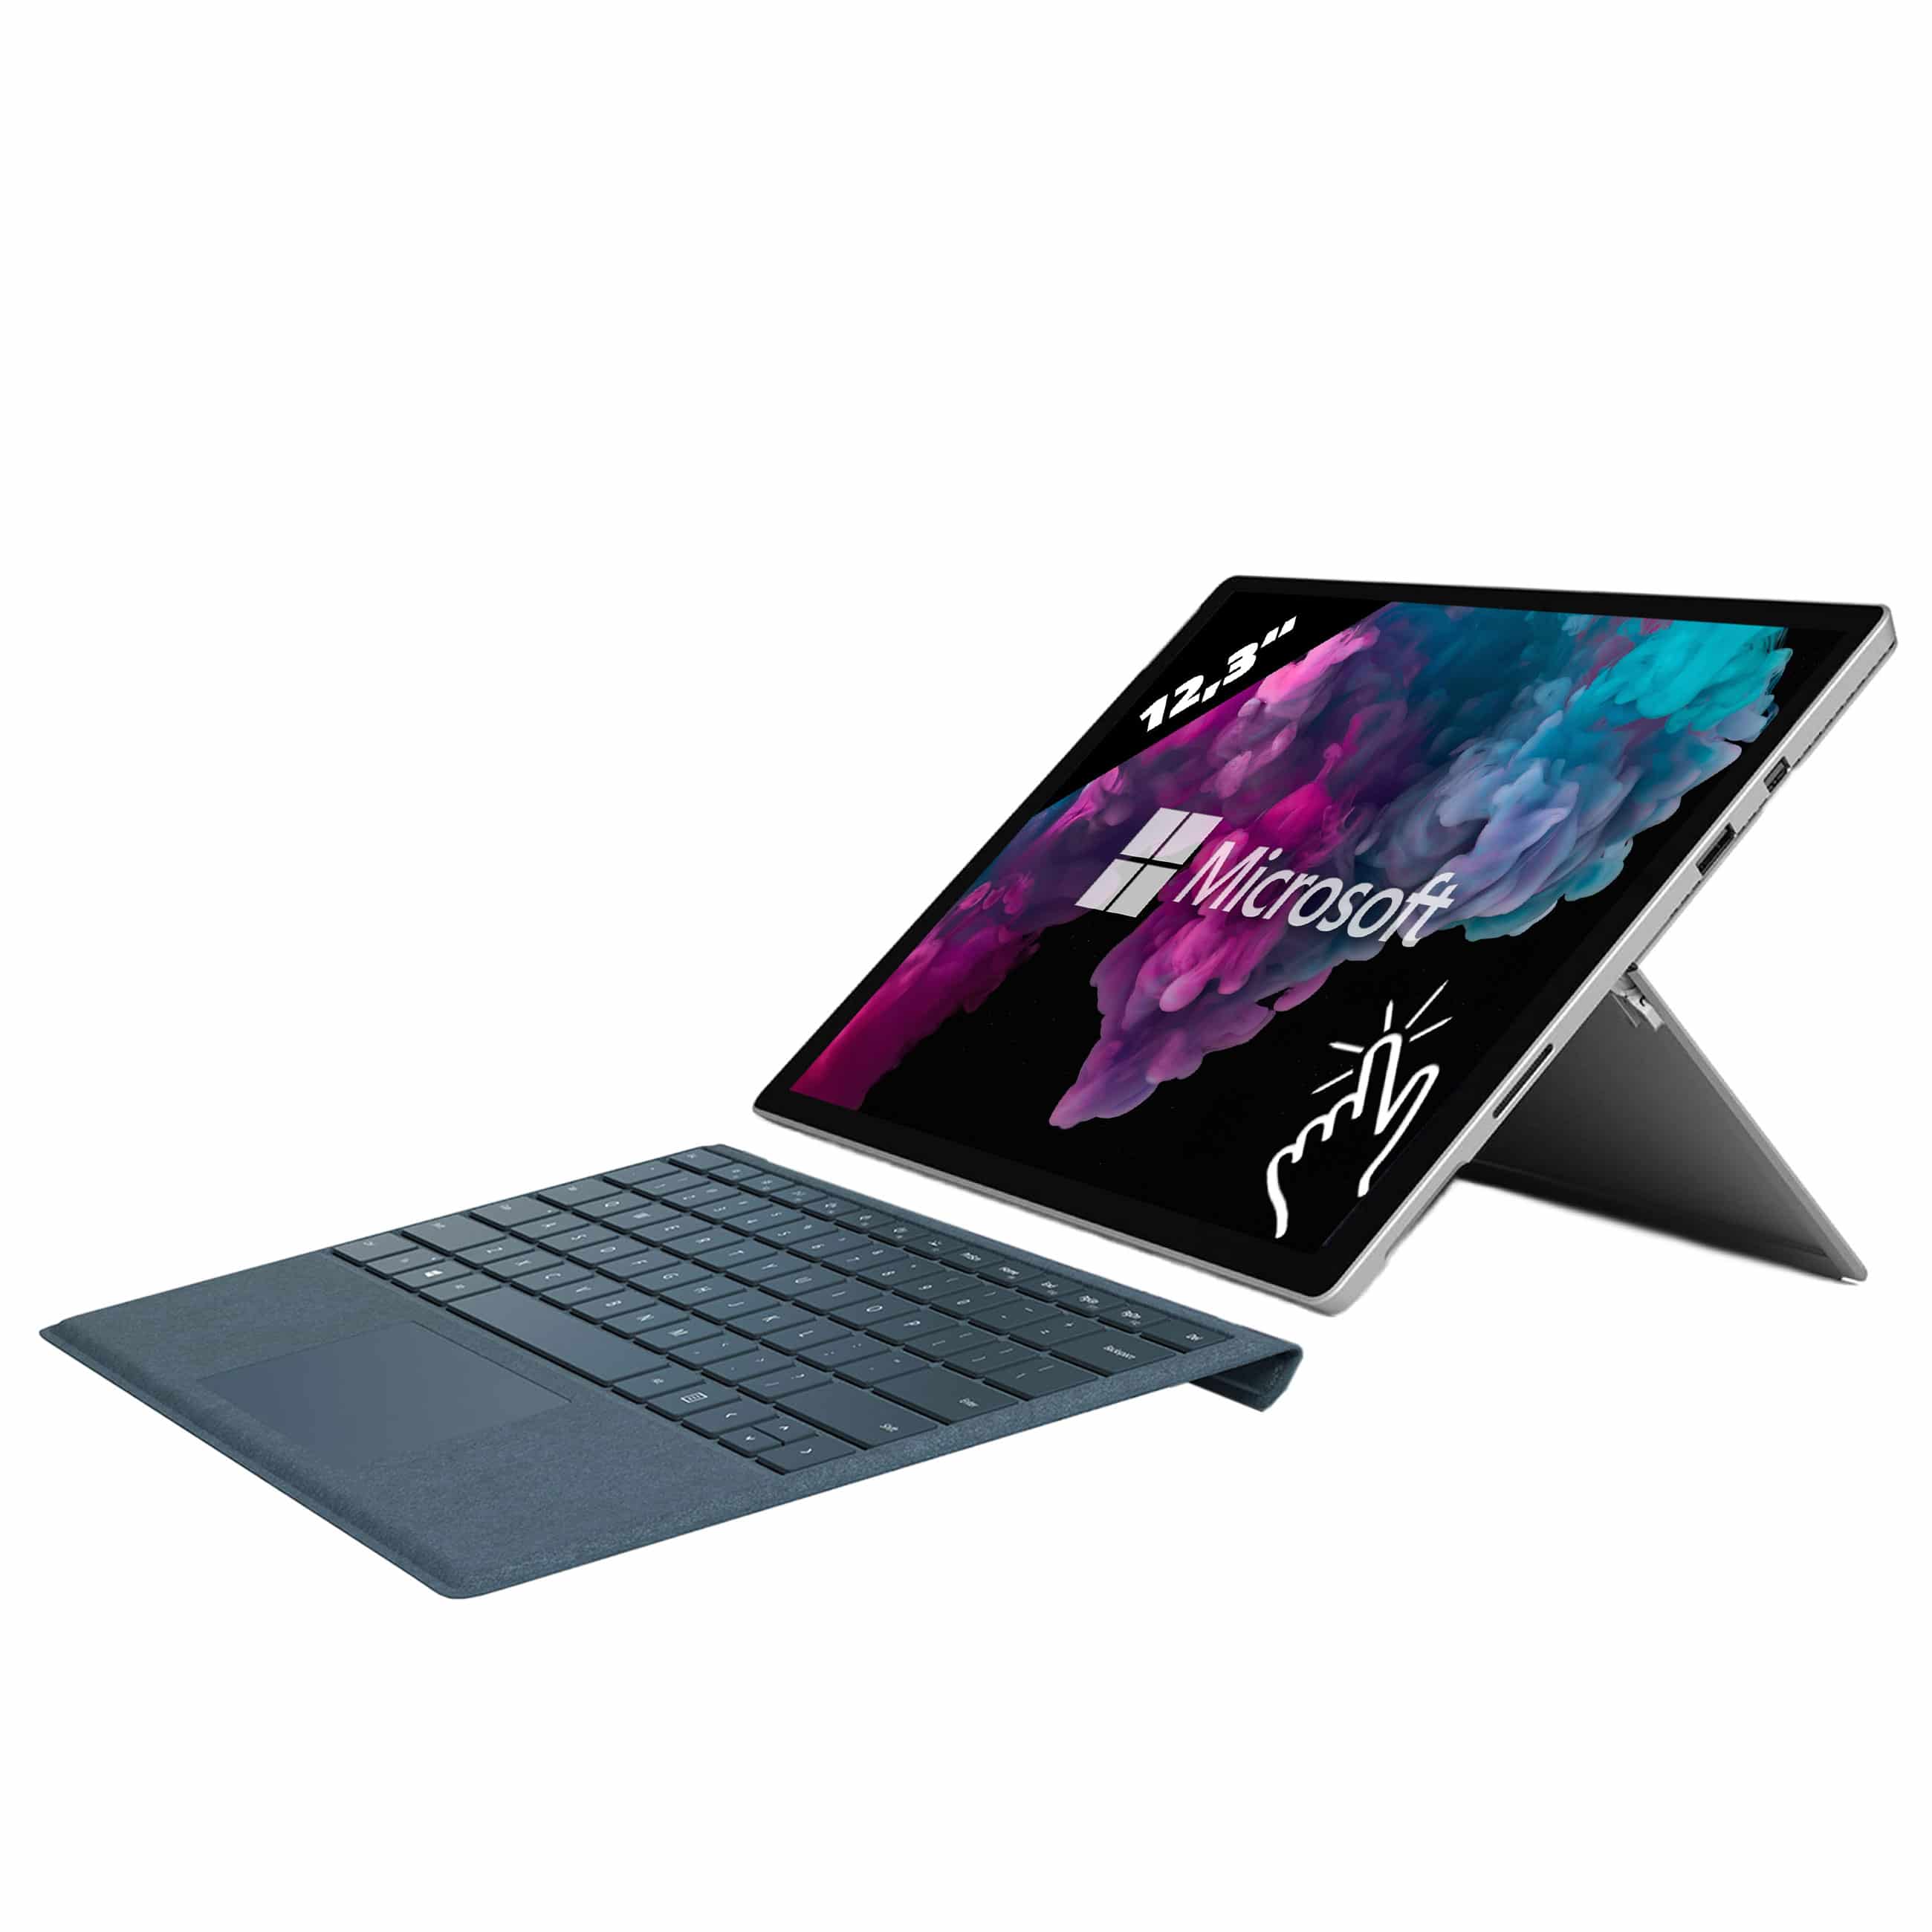 Microsoft Surface Pro 6Gut - AfB-refurbished